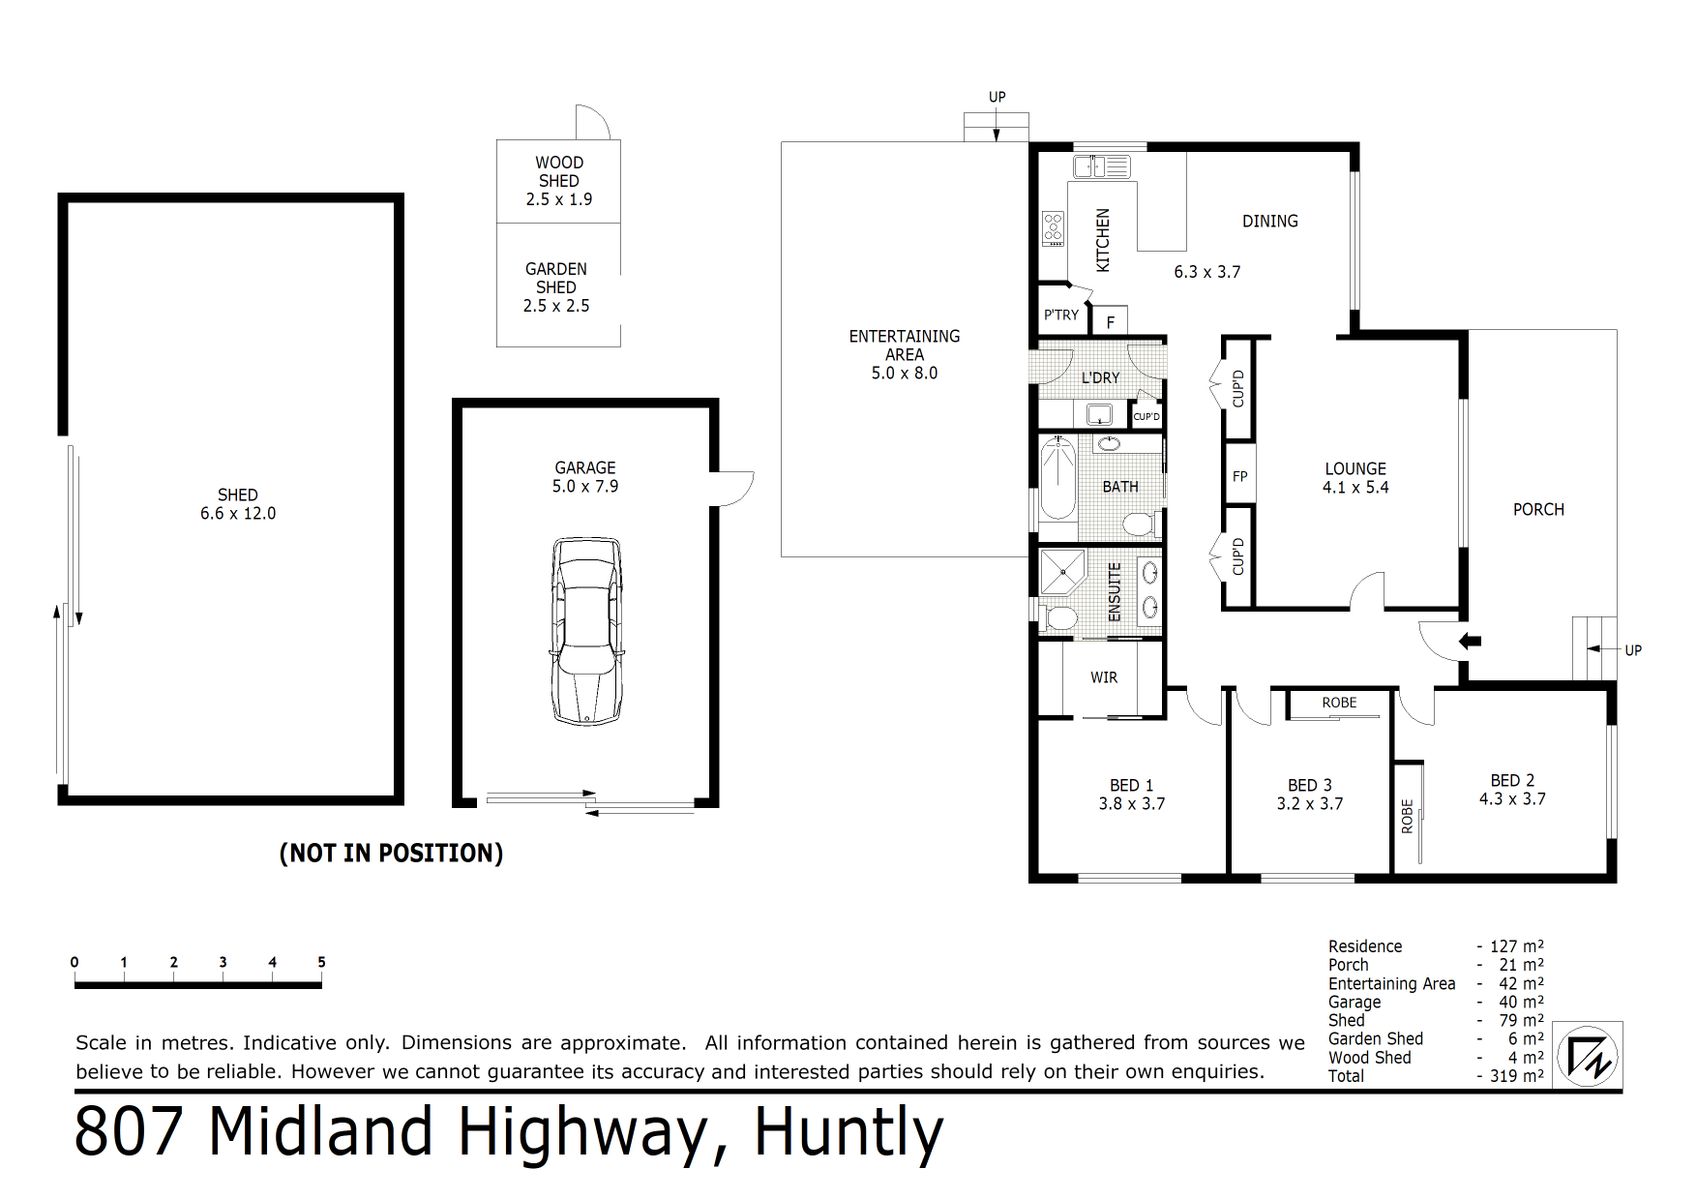 807 Midland Highway Huntly (16 SEP 2021) 127sqm